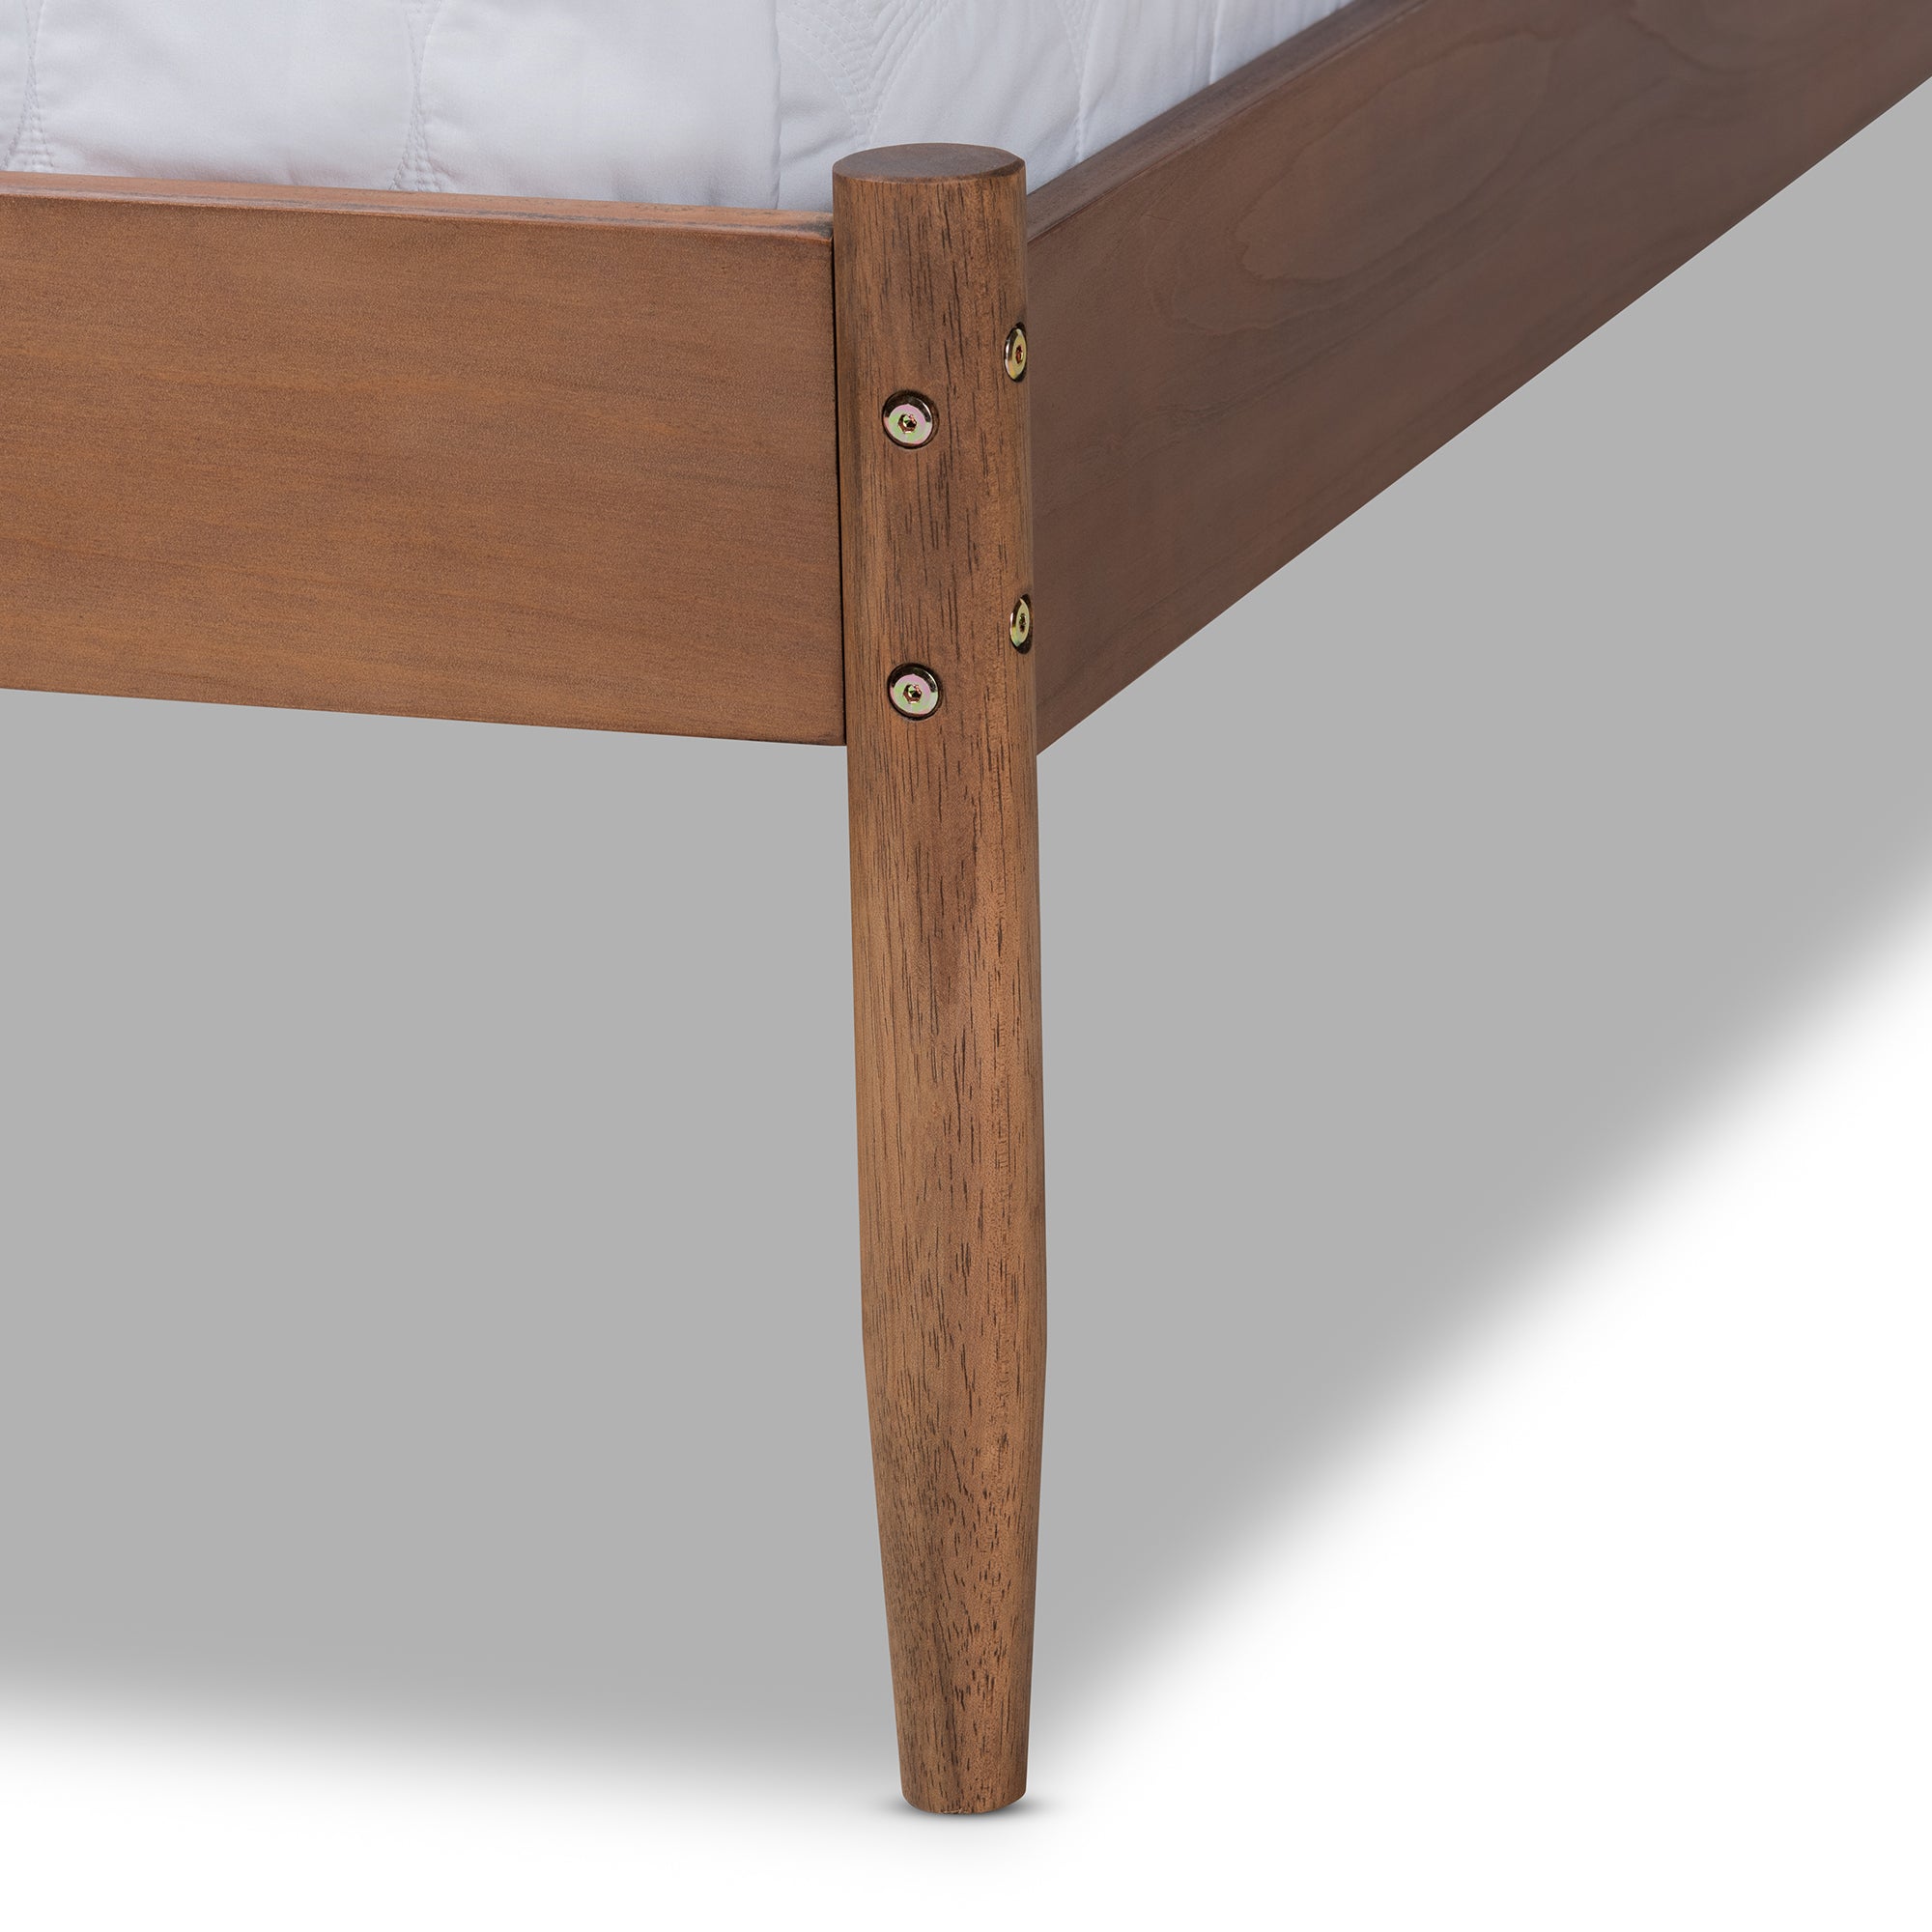 Leanora Modern Bed-Bed-Baxton Studio - WI-Wall2Wall Furnishings